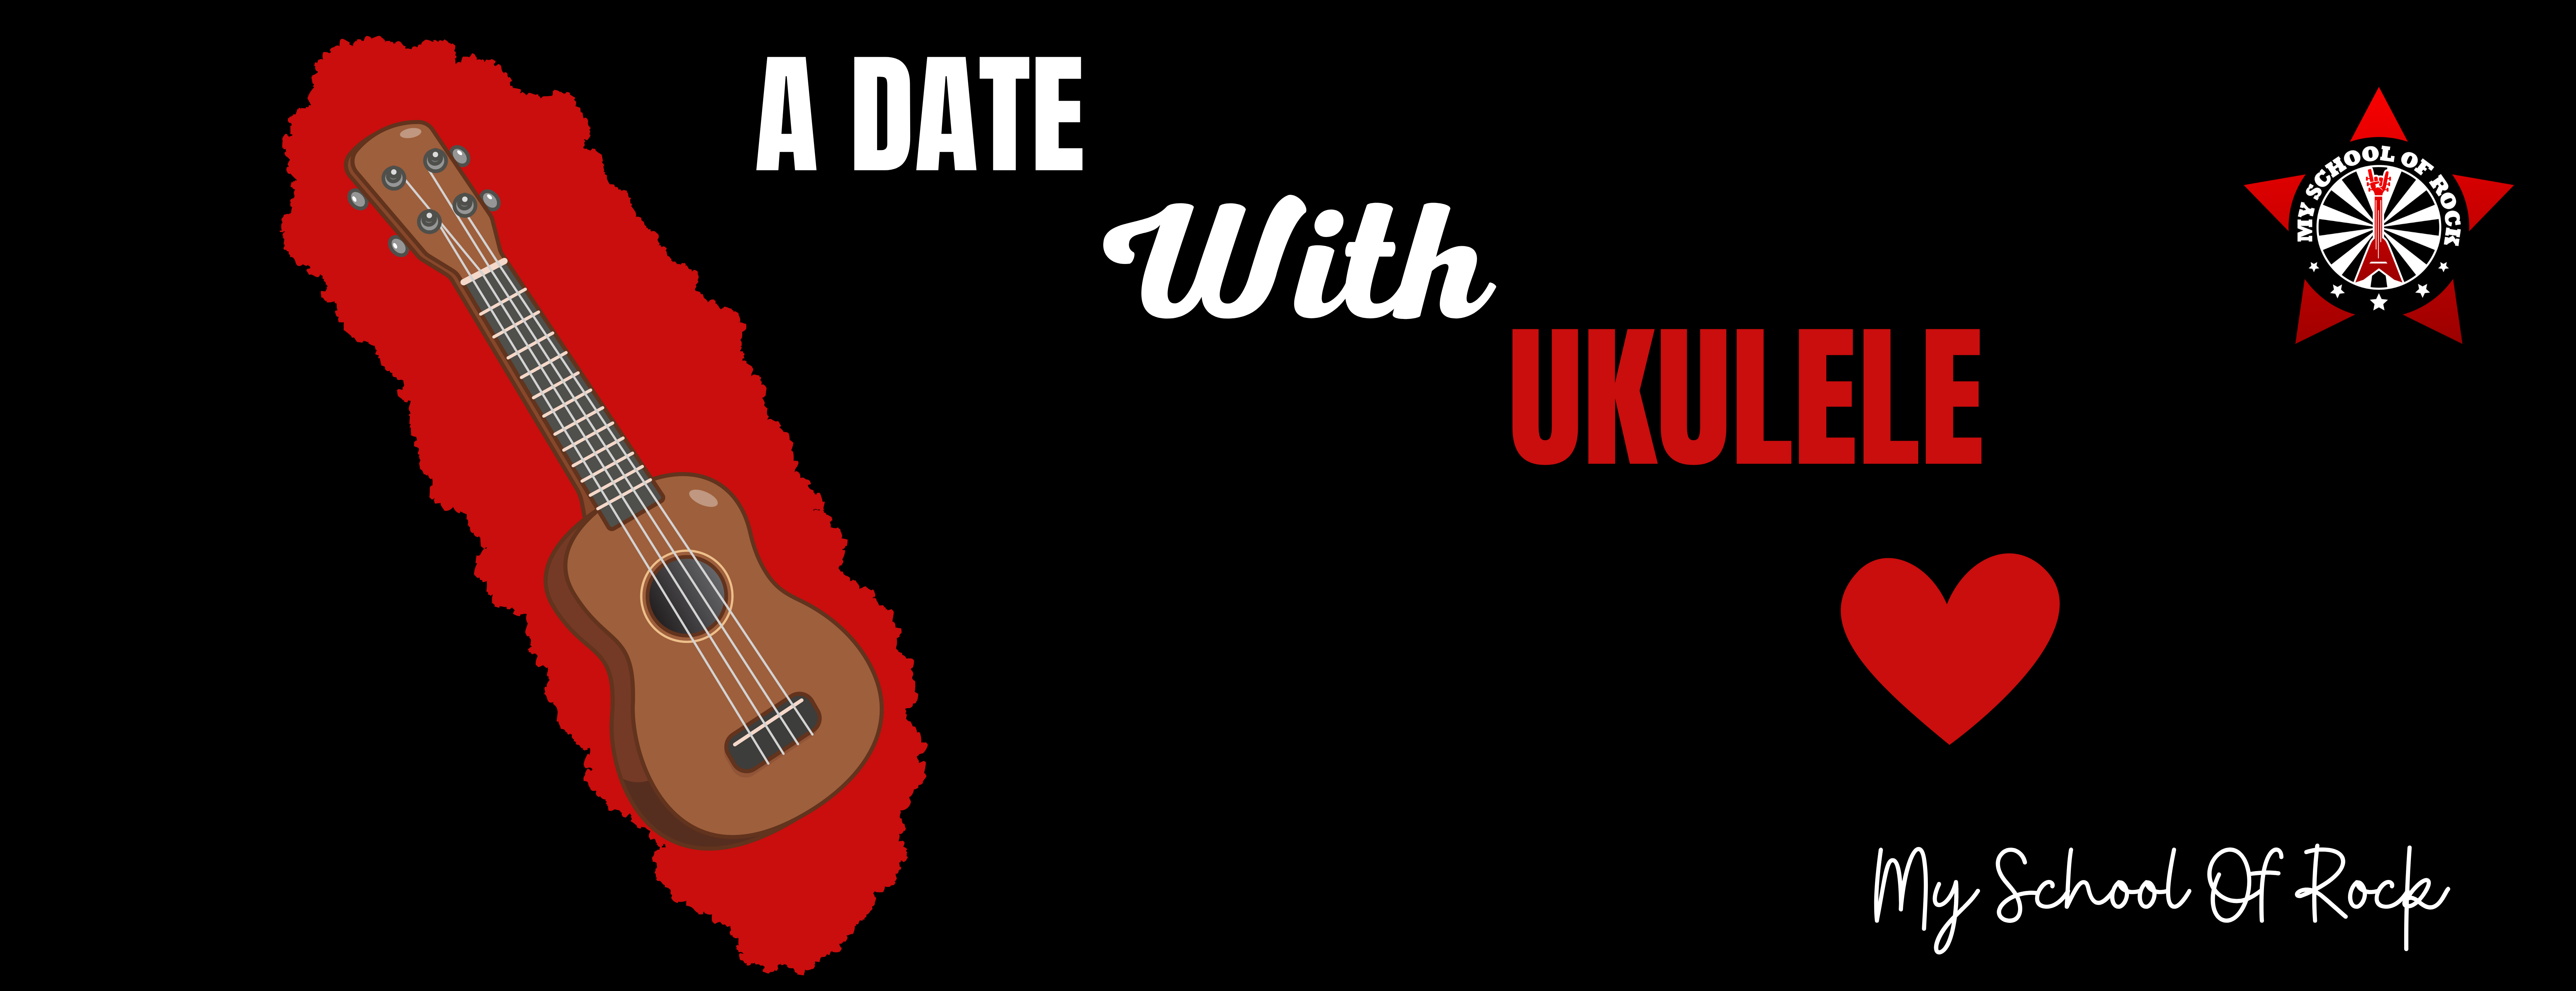 A date with ukulele